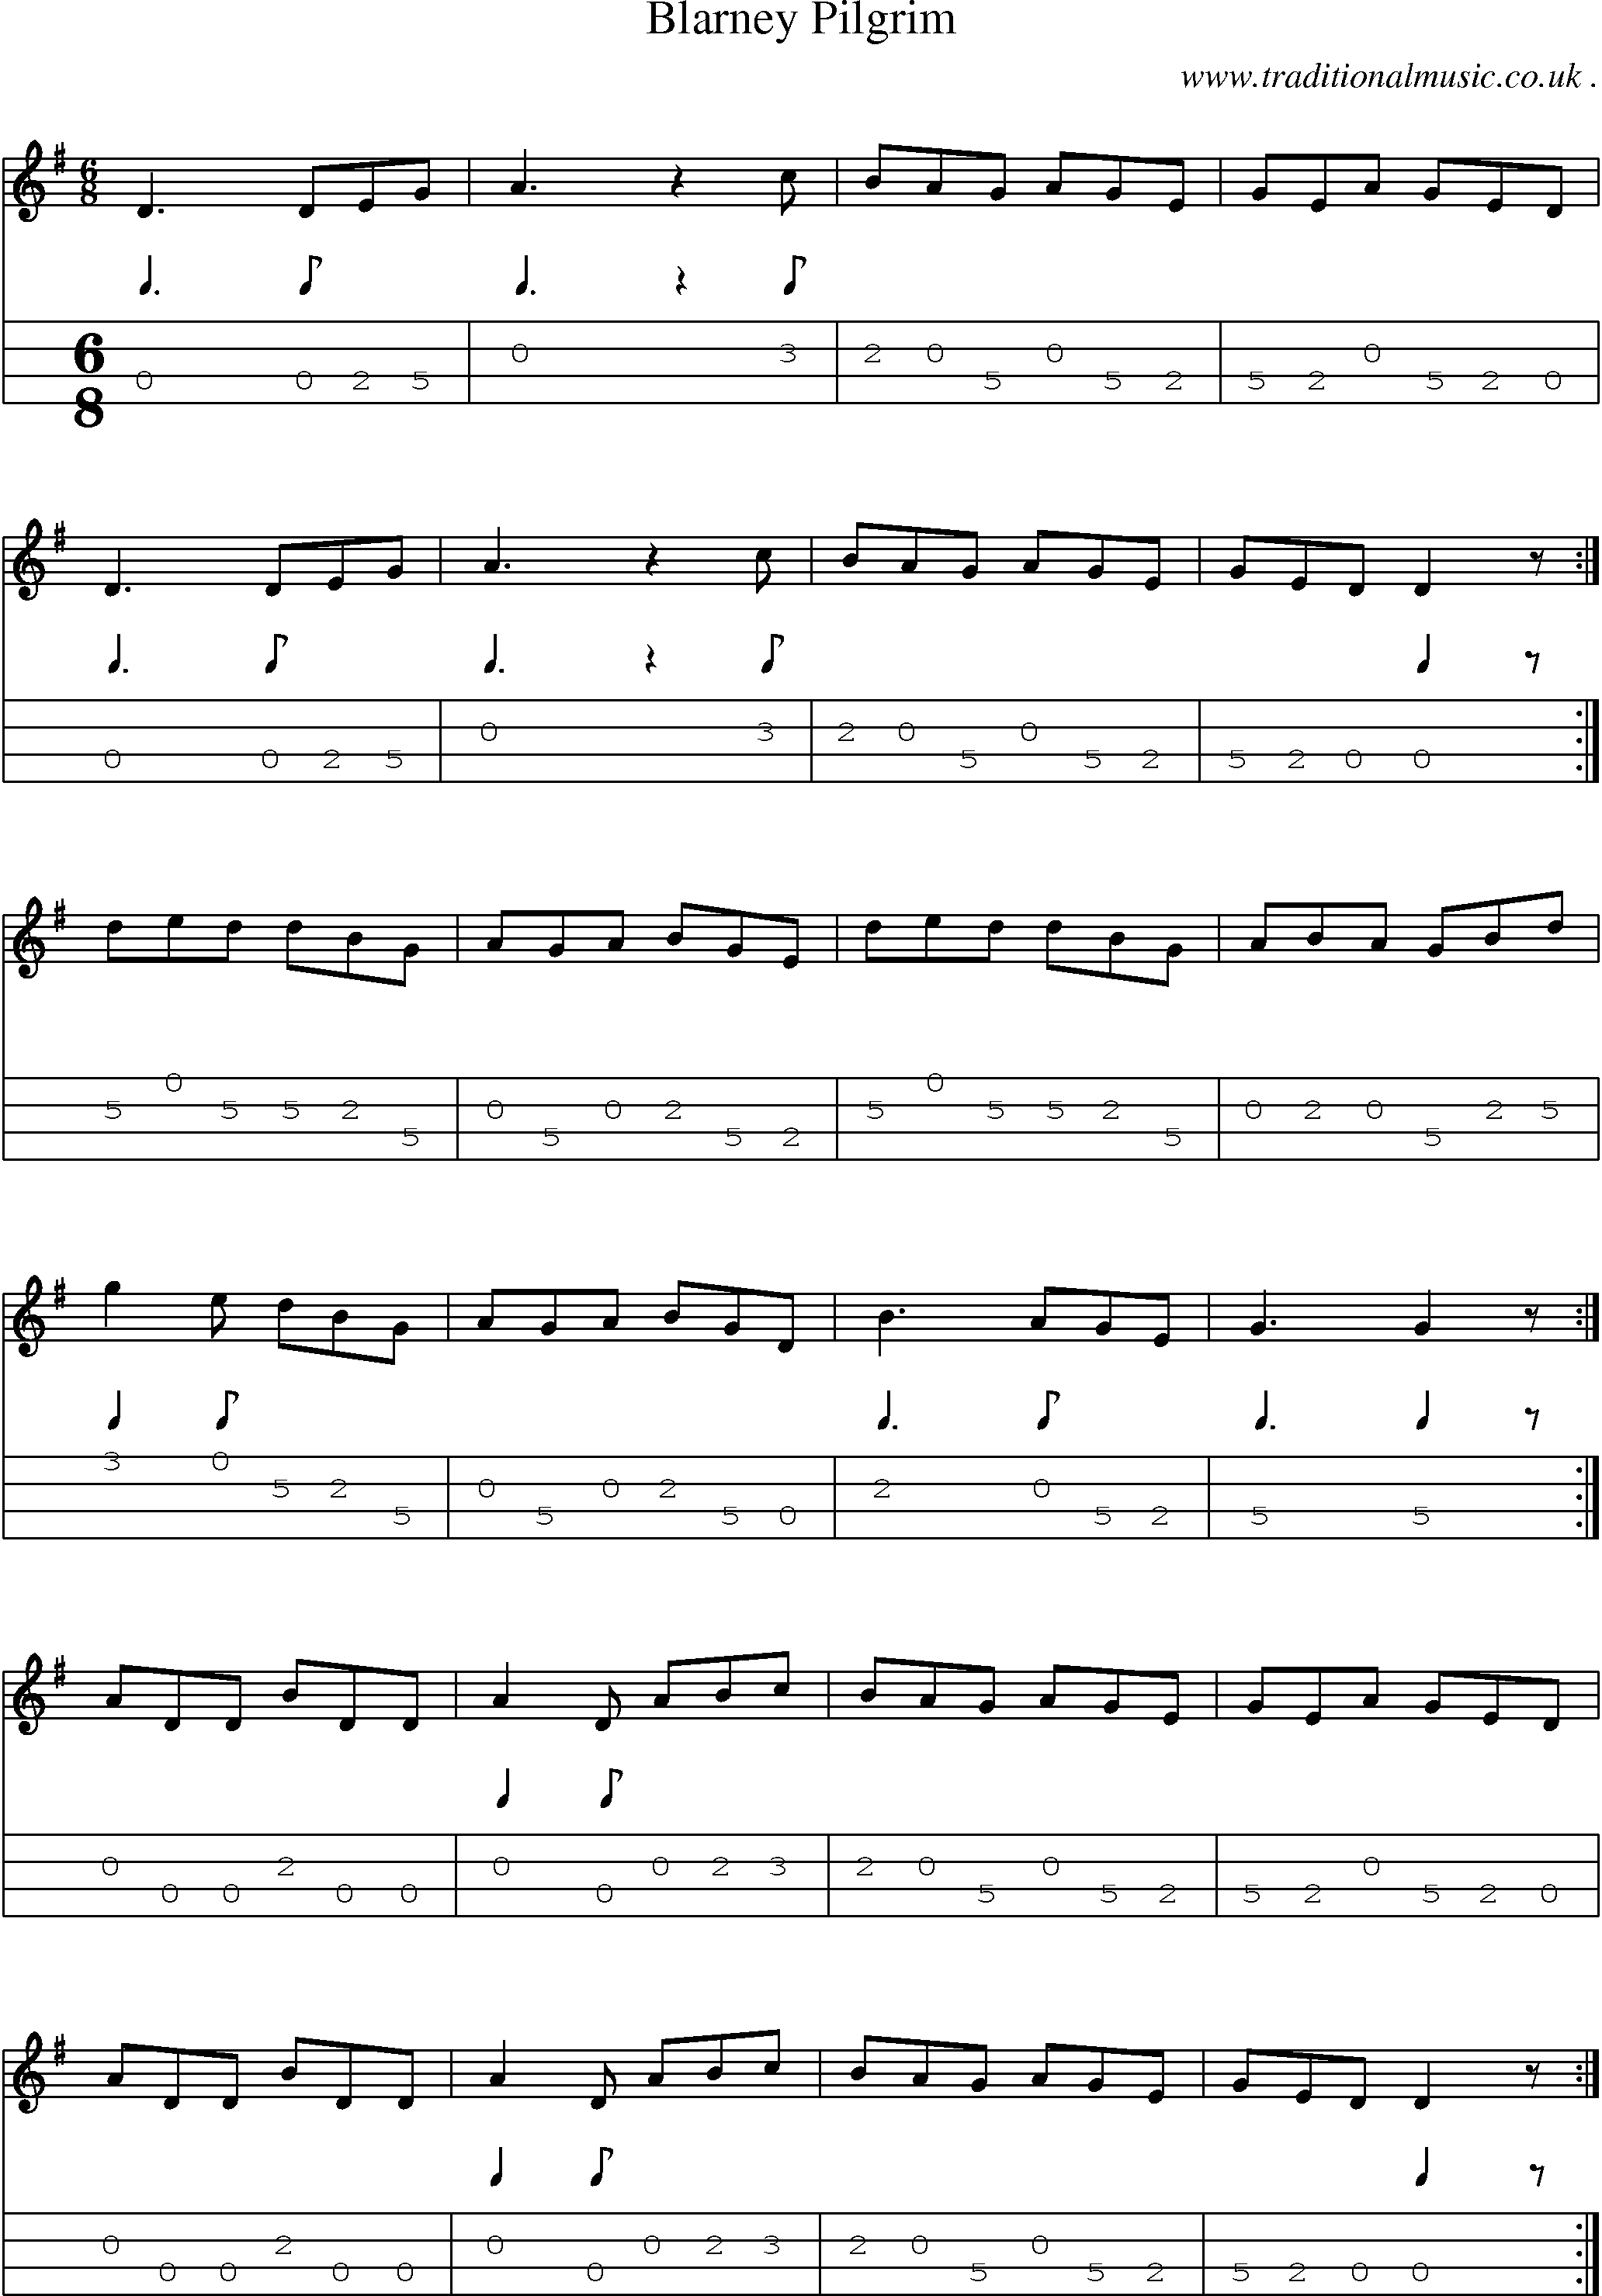 Sheet-Music and Mandolin Tabs for Blarney Pilgrim